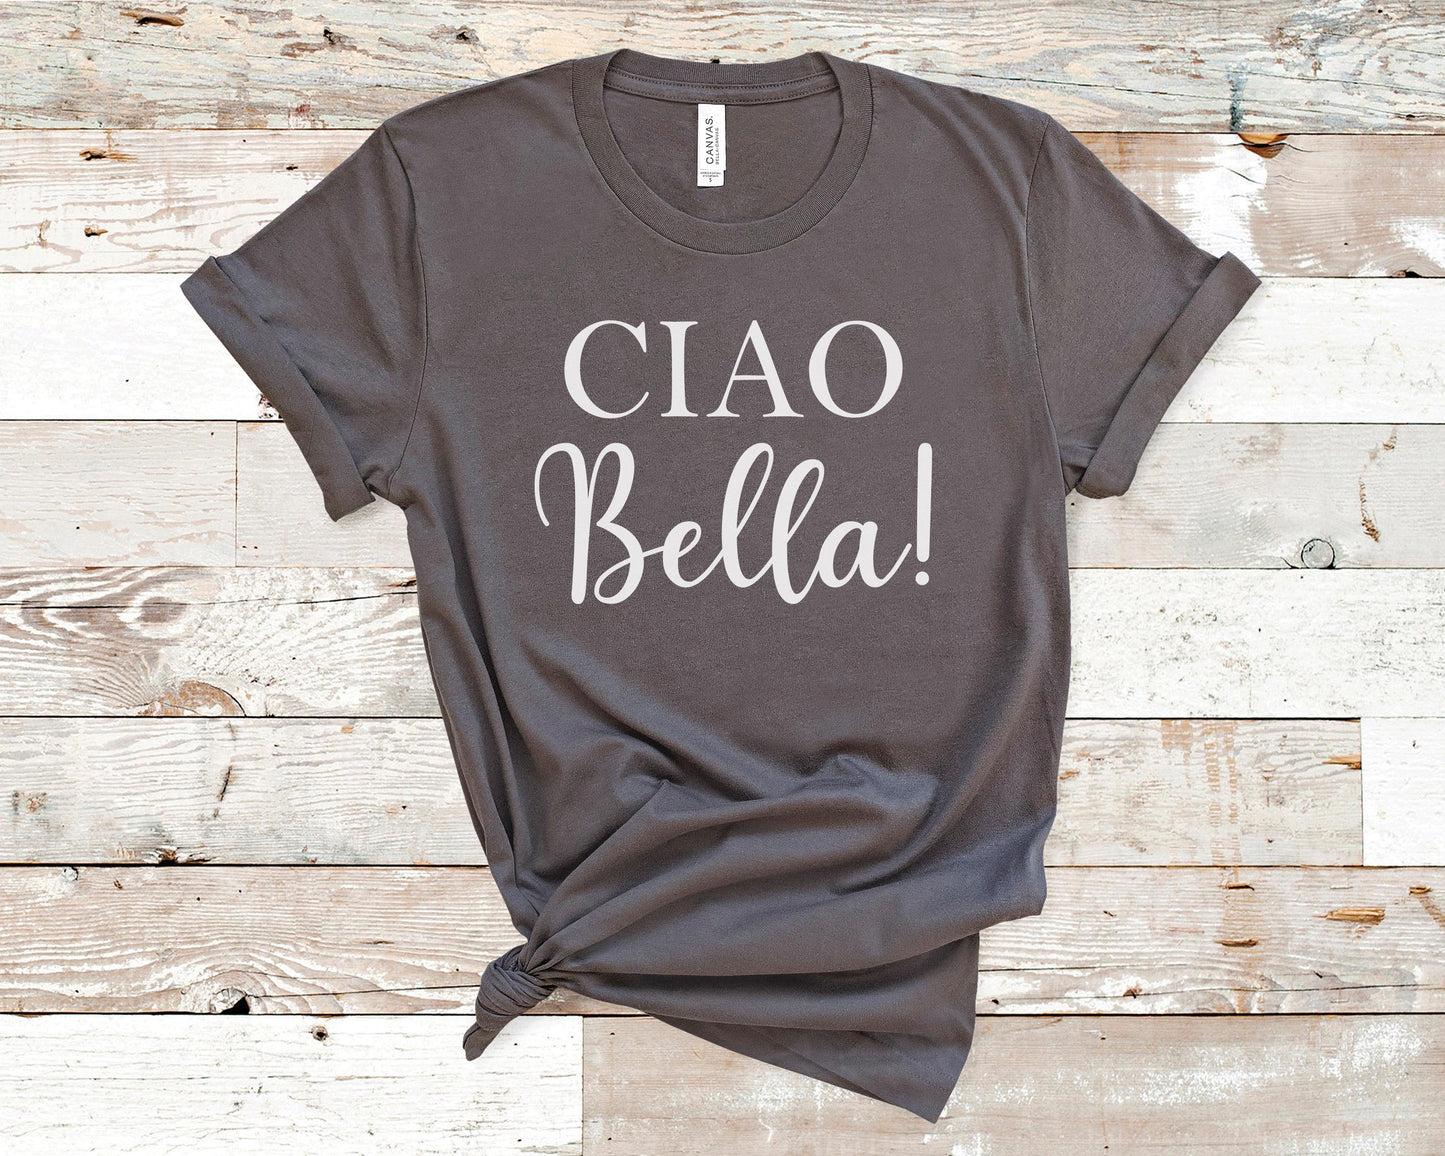 Ciao Bella! - Travel/Vacation